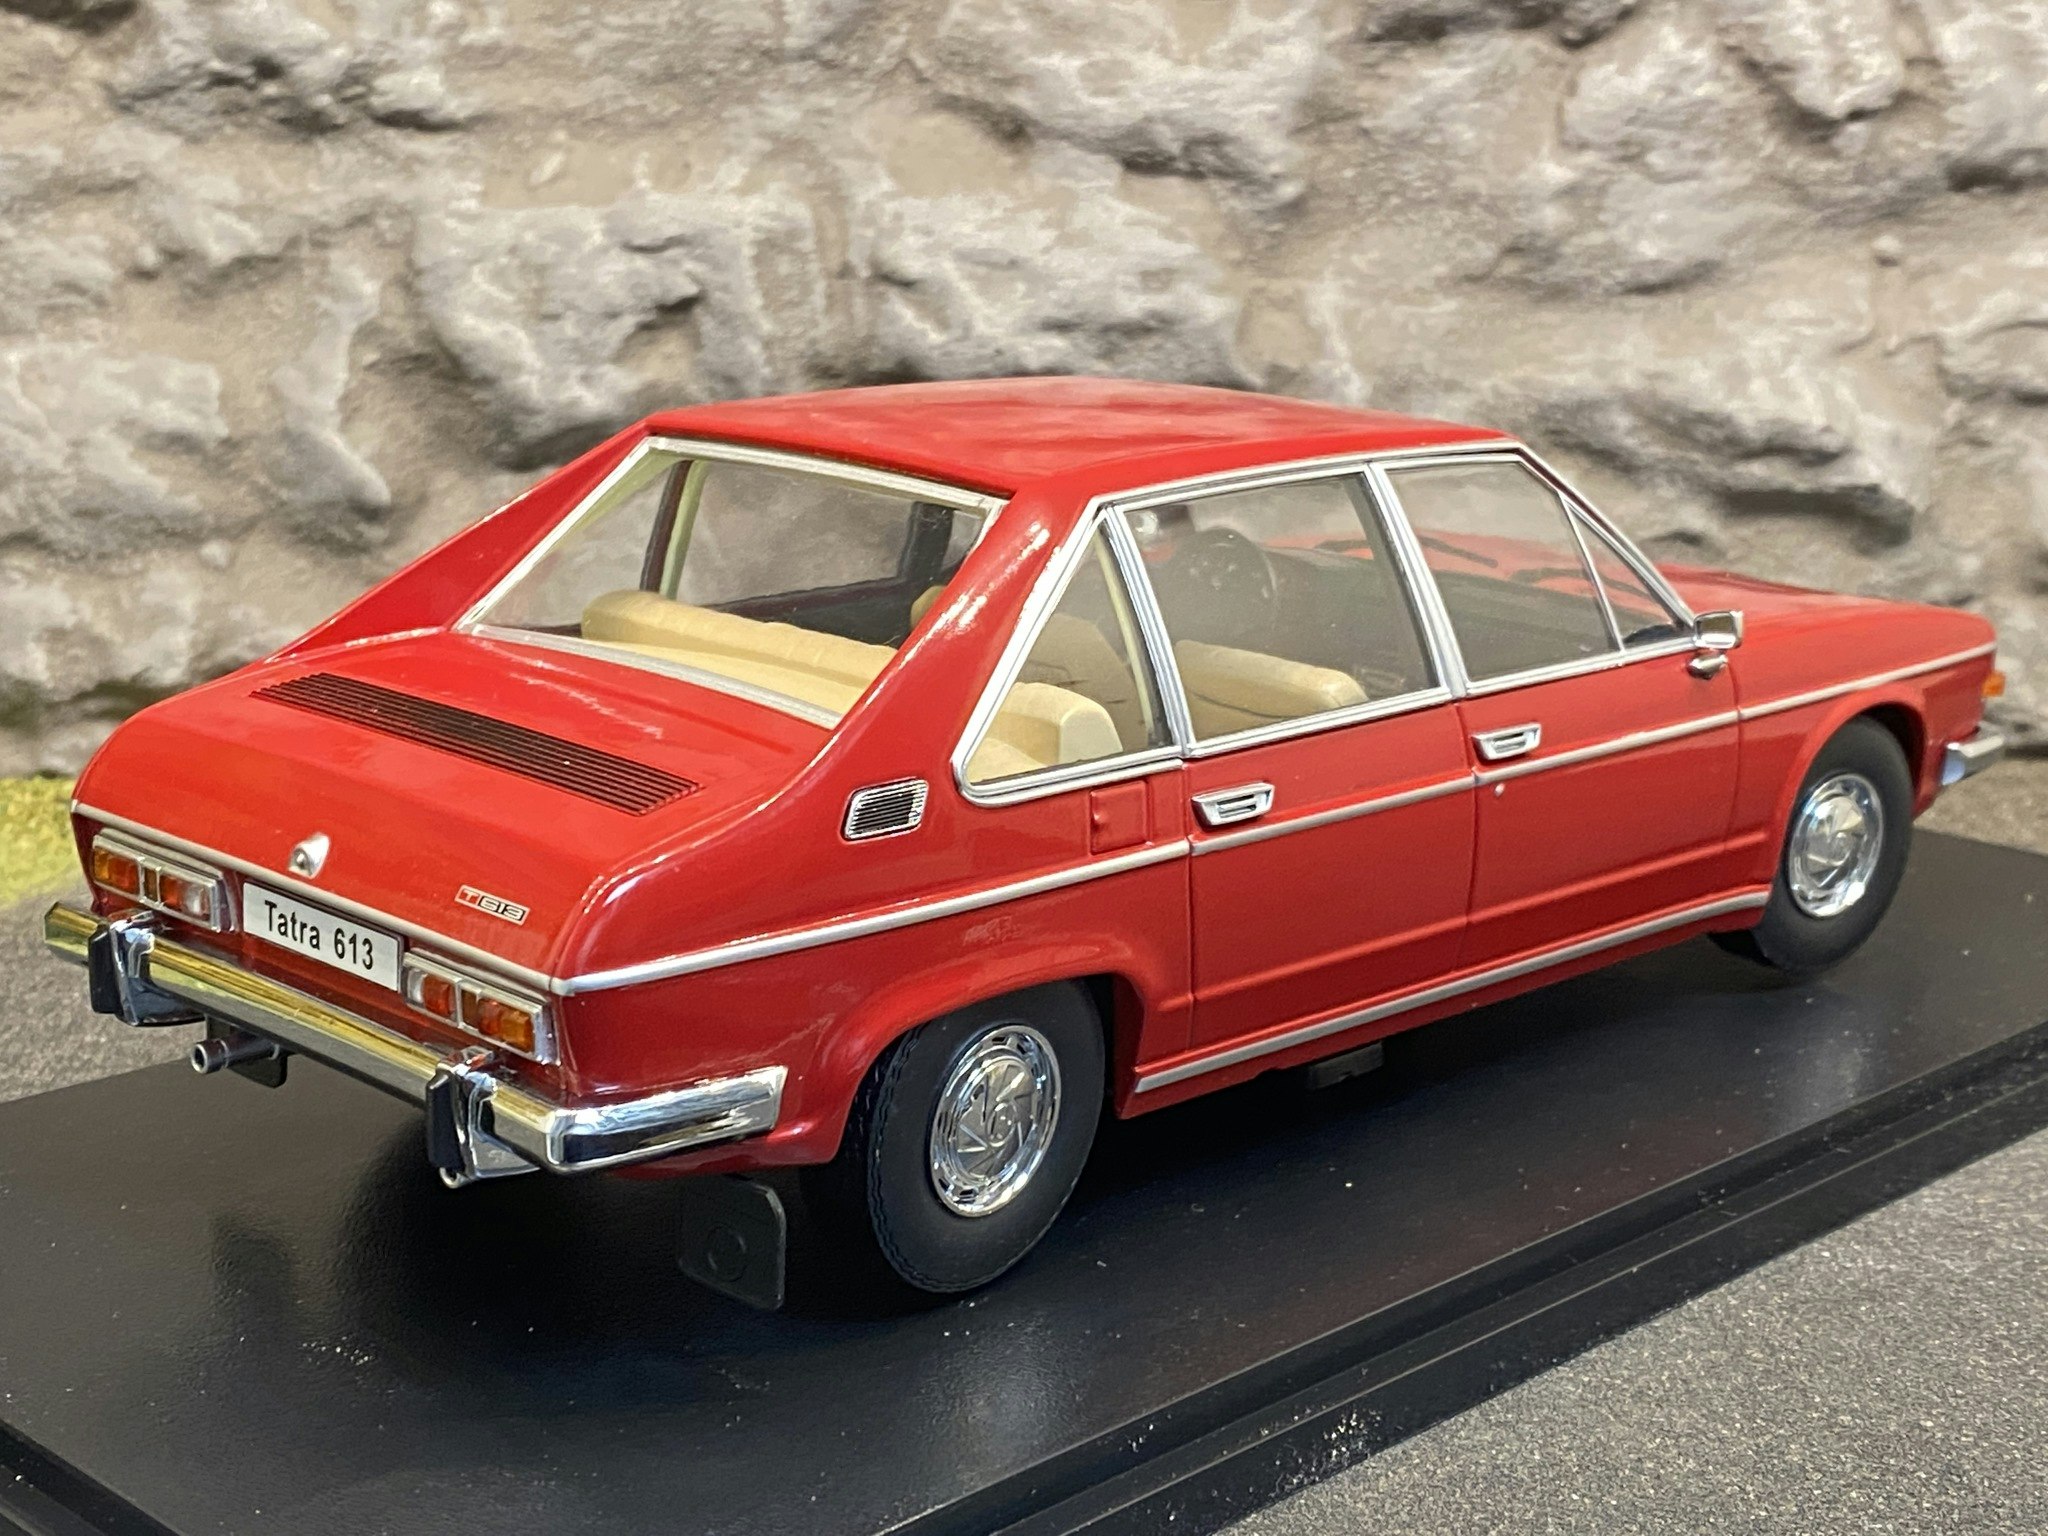 Skala 1/18 Tatra 613 1979' Röd från Triple9 Collection